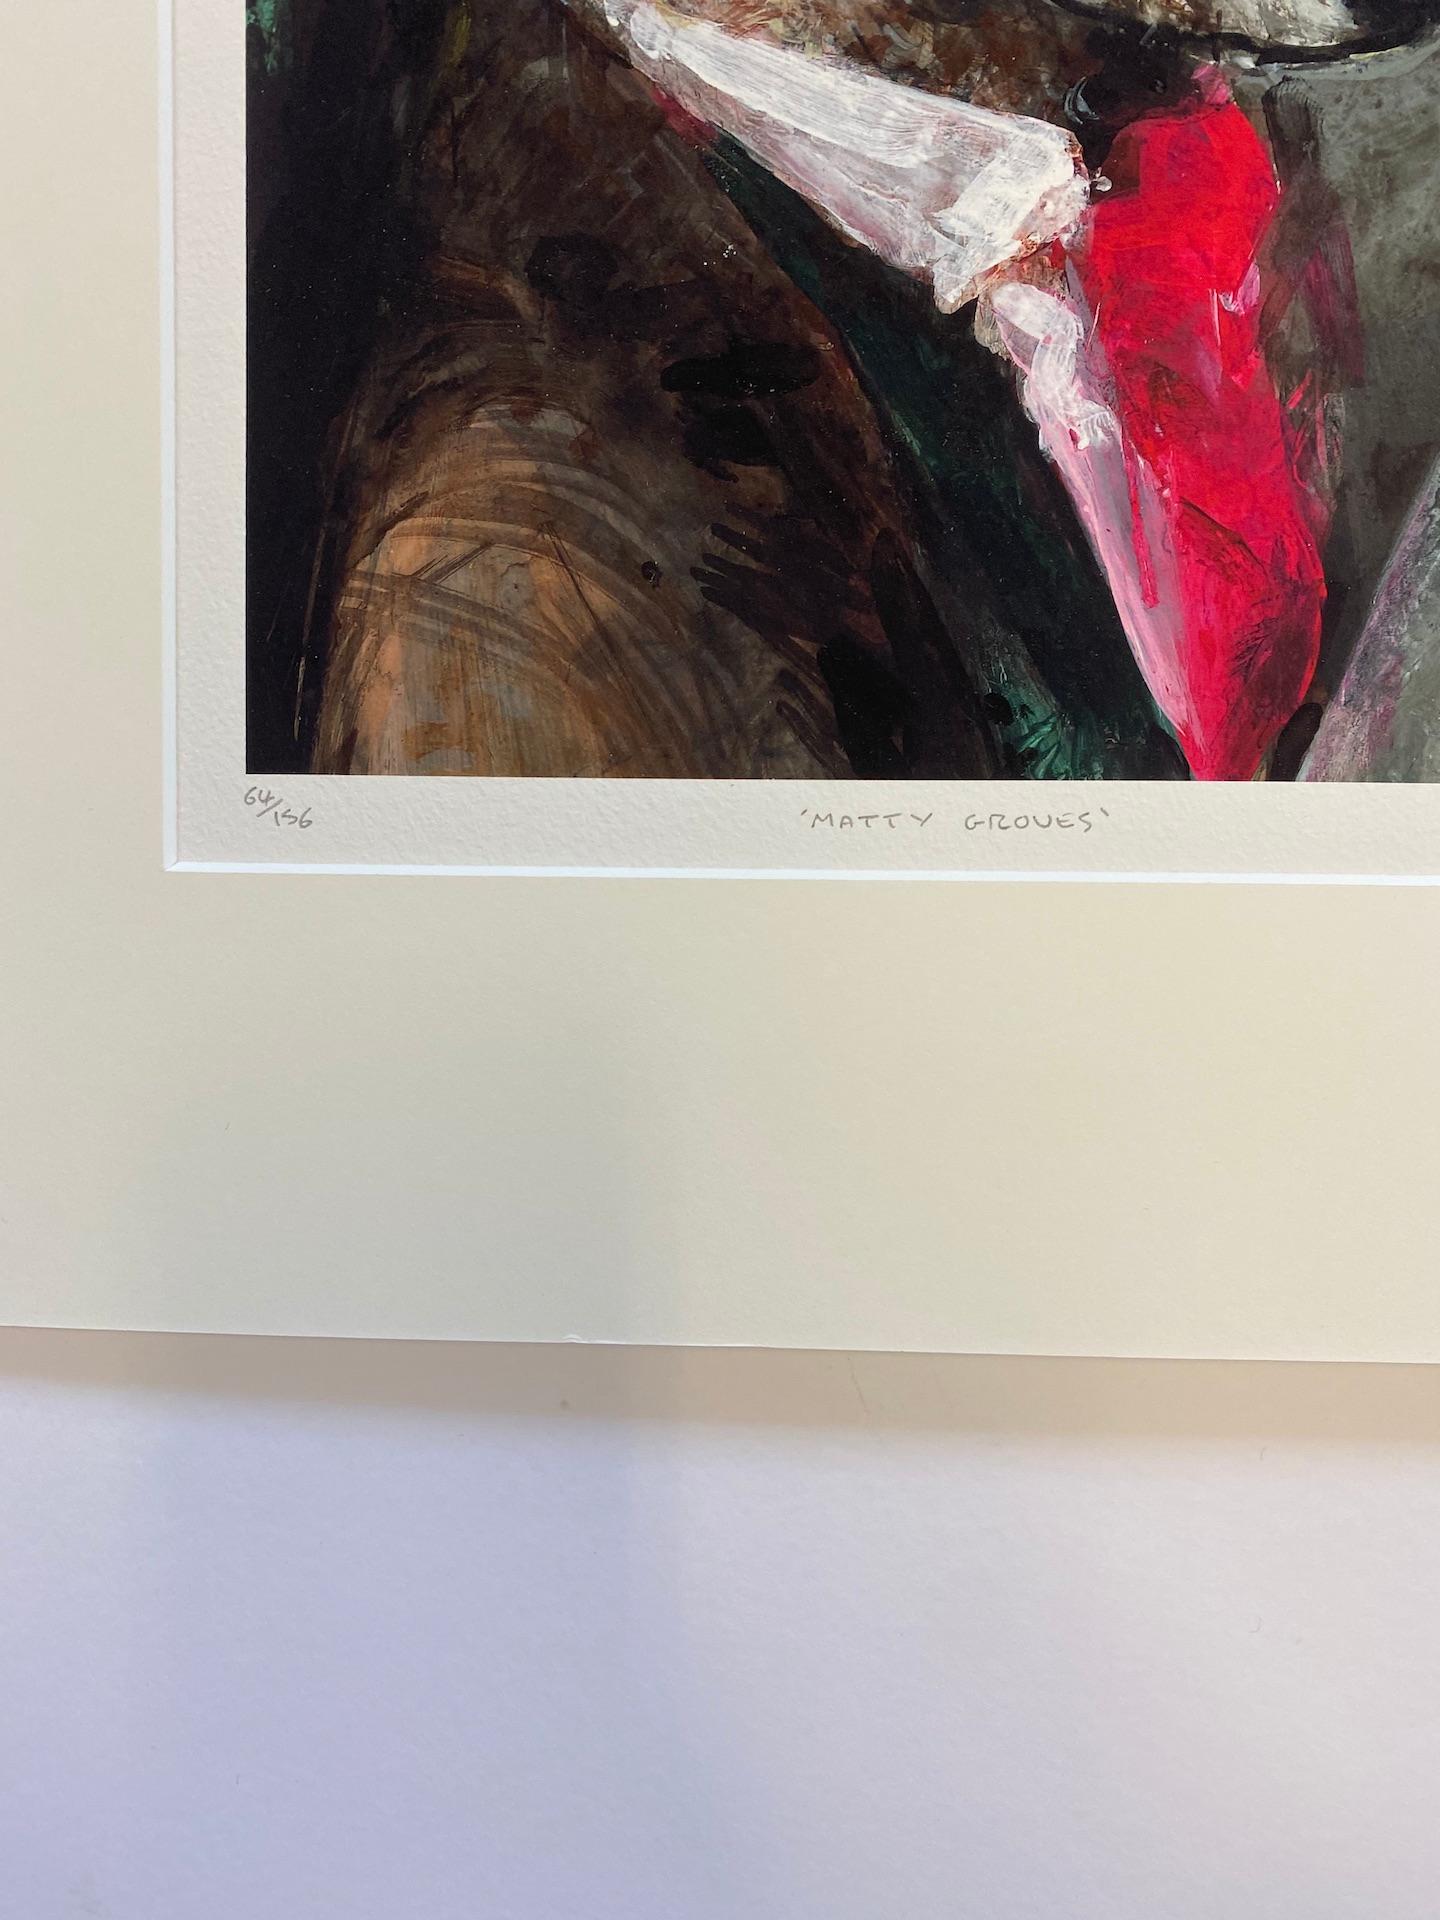 Harry Bunce, Matty Groves, Limited Edition Print, Environmental Art, Art Online 2